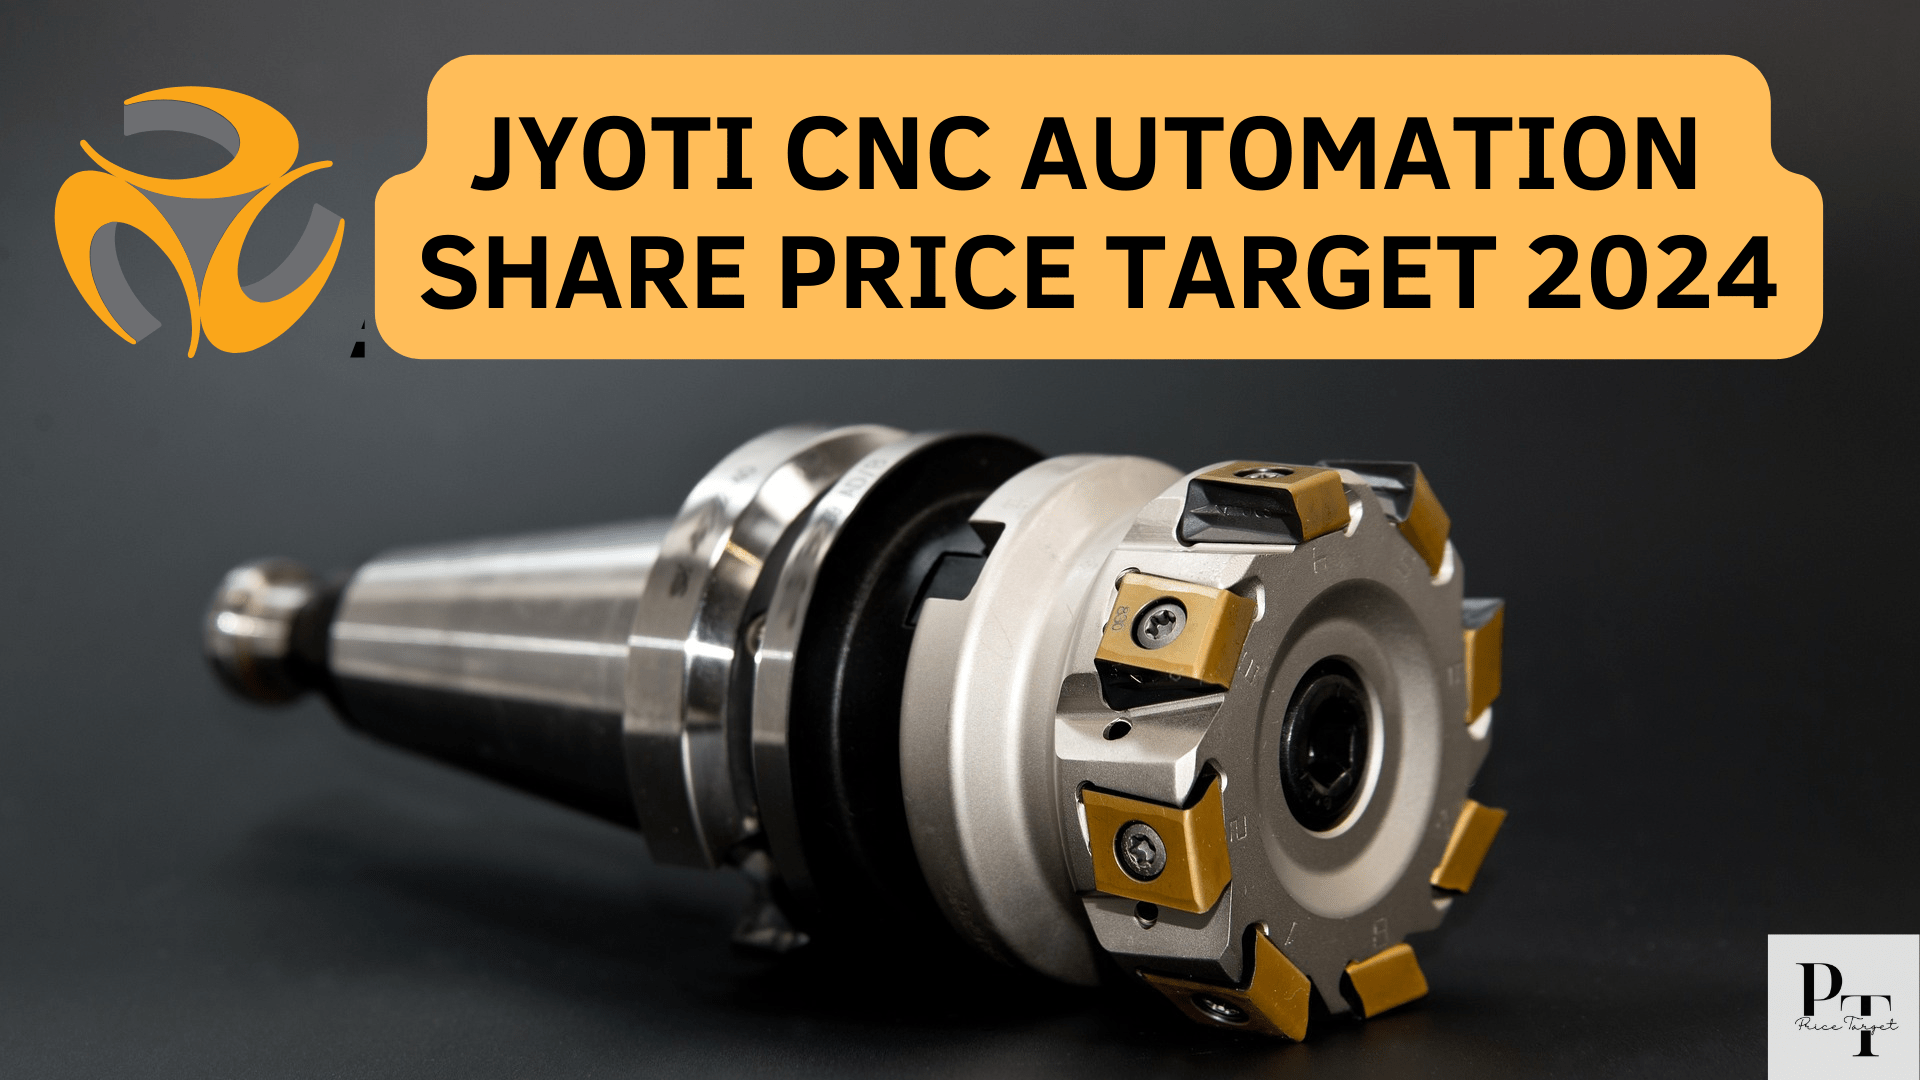 Jyoti CNC Automation Share Price Target 2024